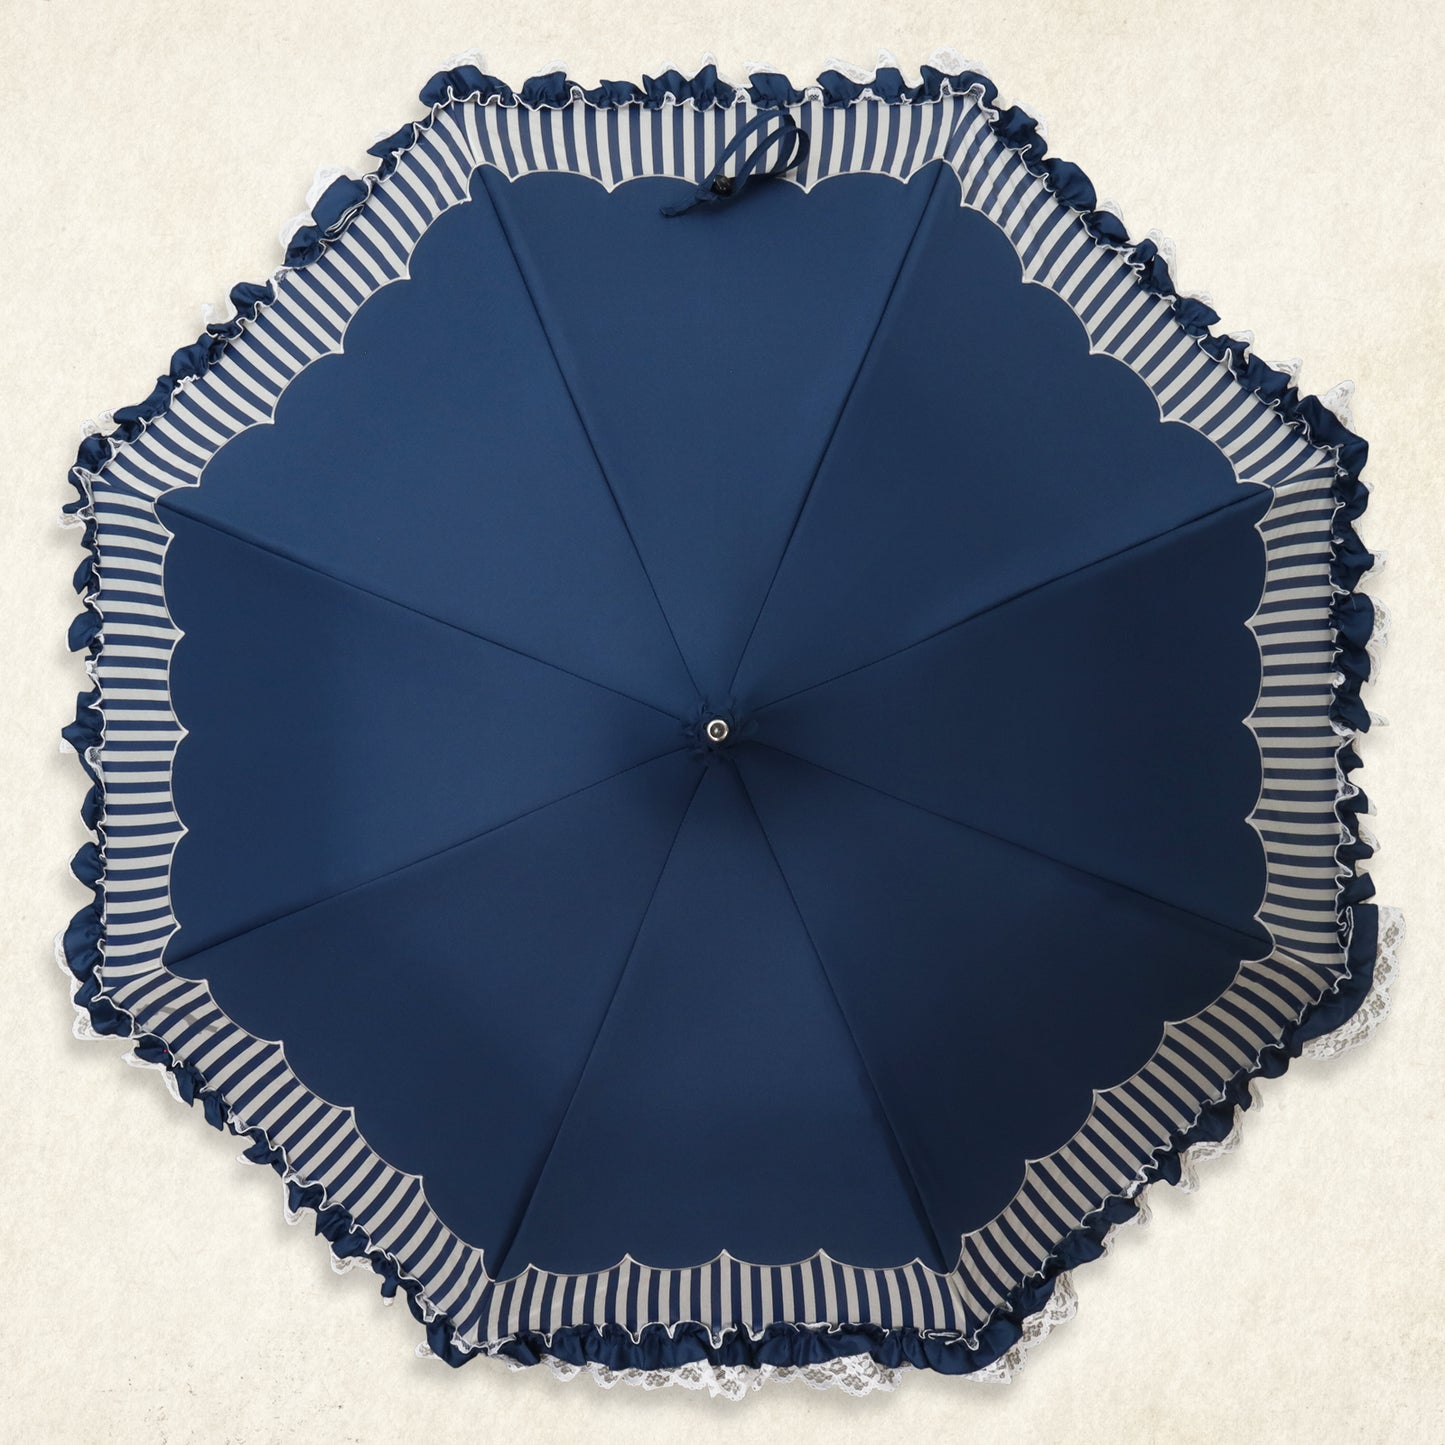 【New】couronne-fleur (クローネ フルール) - 1級遮光 晴雨兼用 雨傘 UVカット ショート丈 フリル